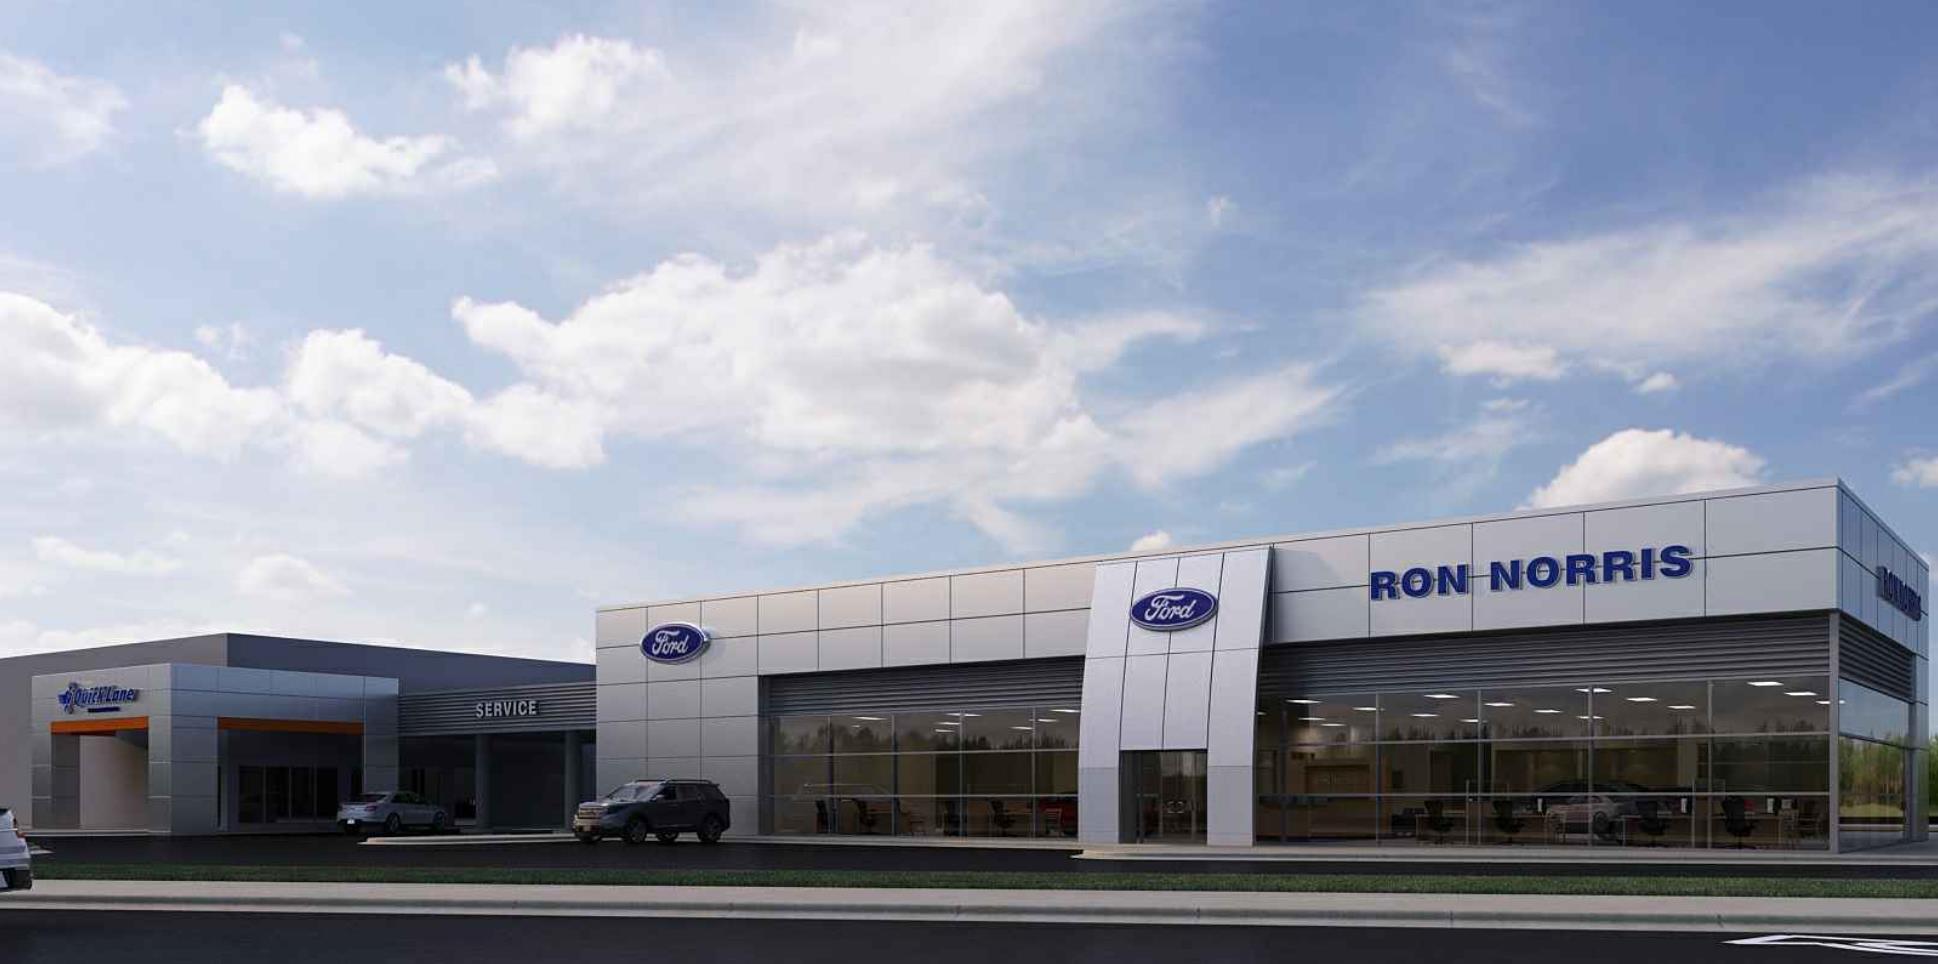 Ron Norris Ford Dealership Construction - Exterior Rendering - Titusville - RUSH Construction